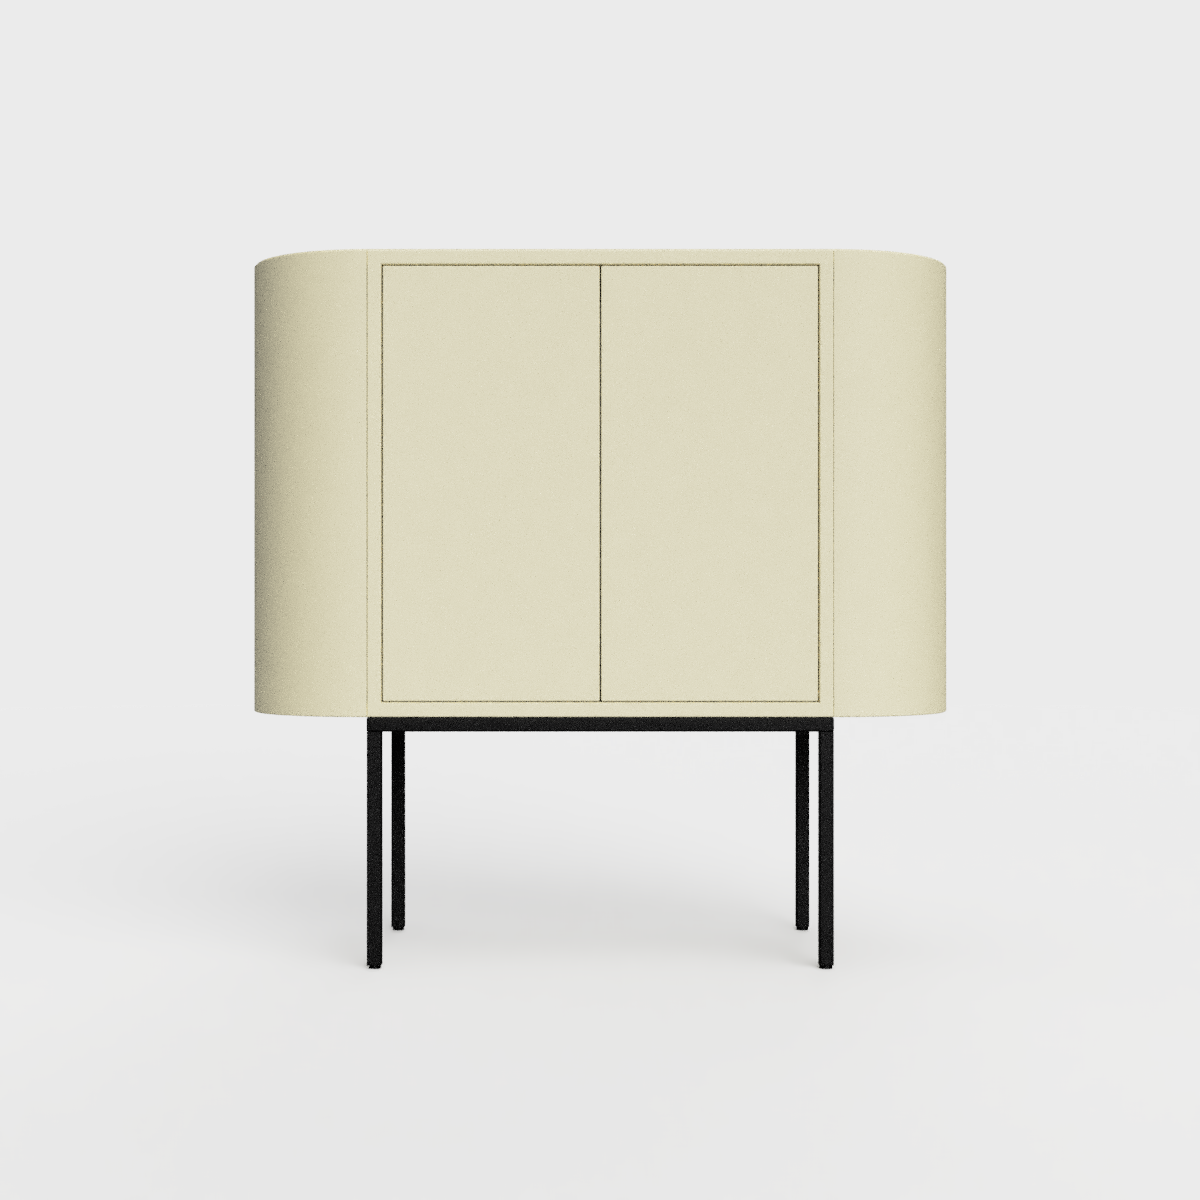 Siena 01 Sideboard in light ecru color, powder-coated steel, elegant and modern piece of furniture for your living room